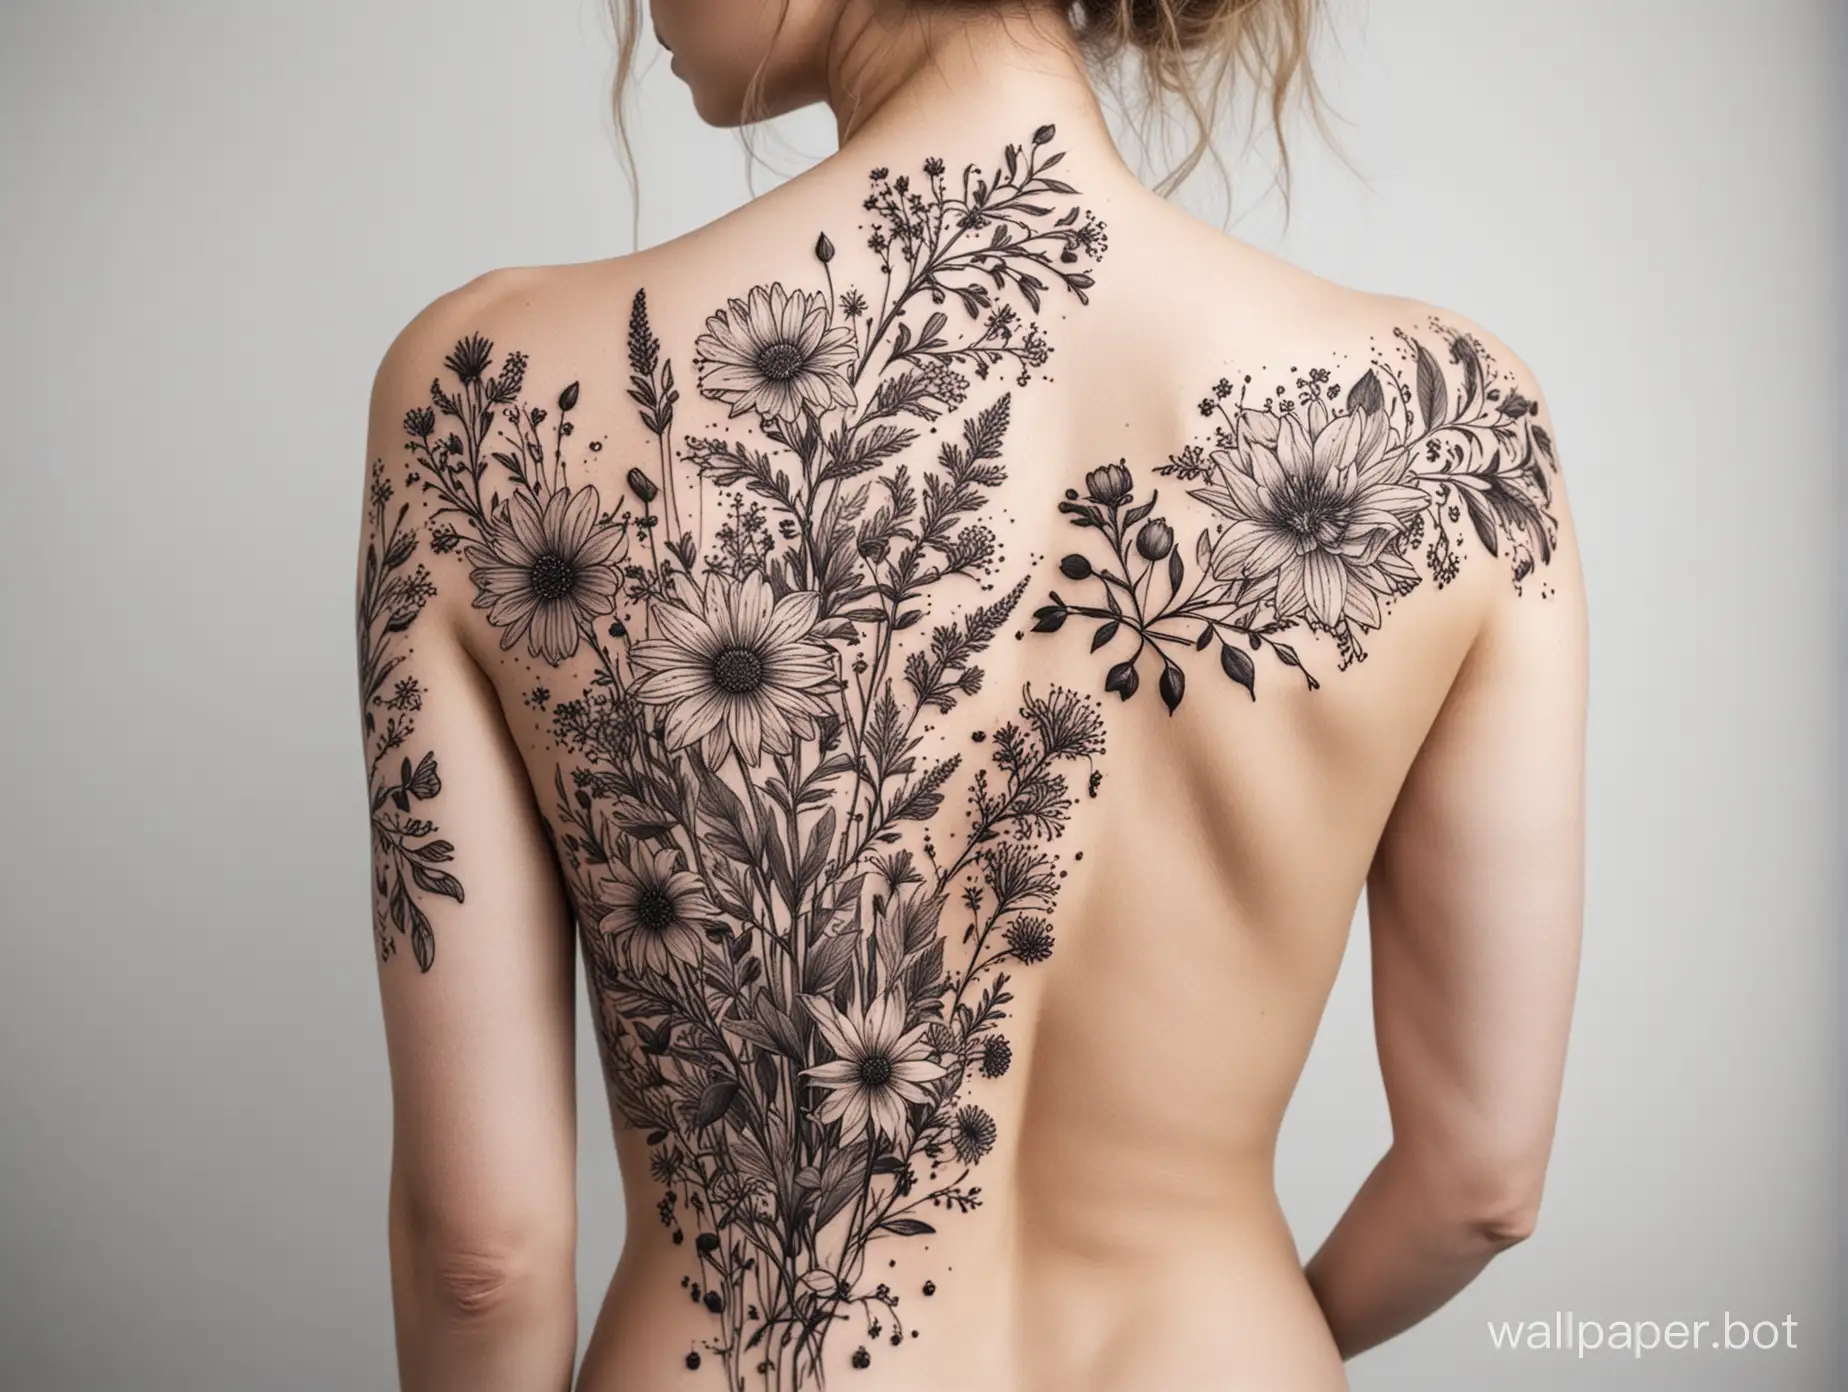 amazing wildflowers pattern tattoo, showing back tattoo, hipperdetailed blackwork, dotwork, studio photo, white background